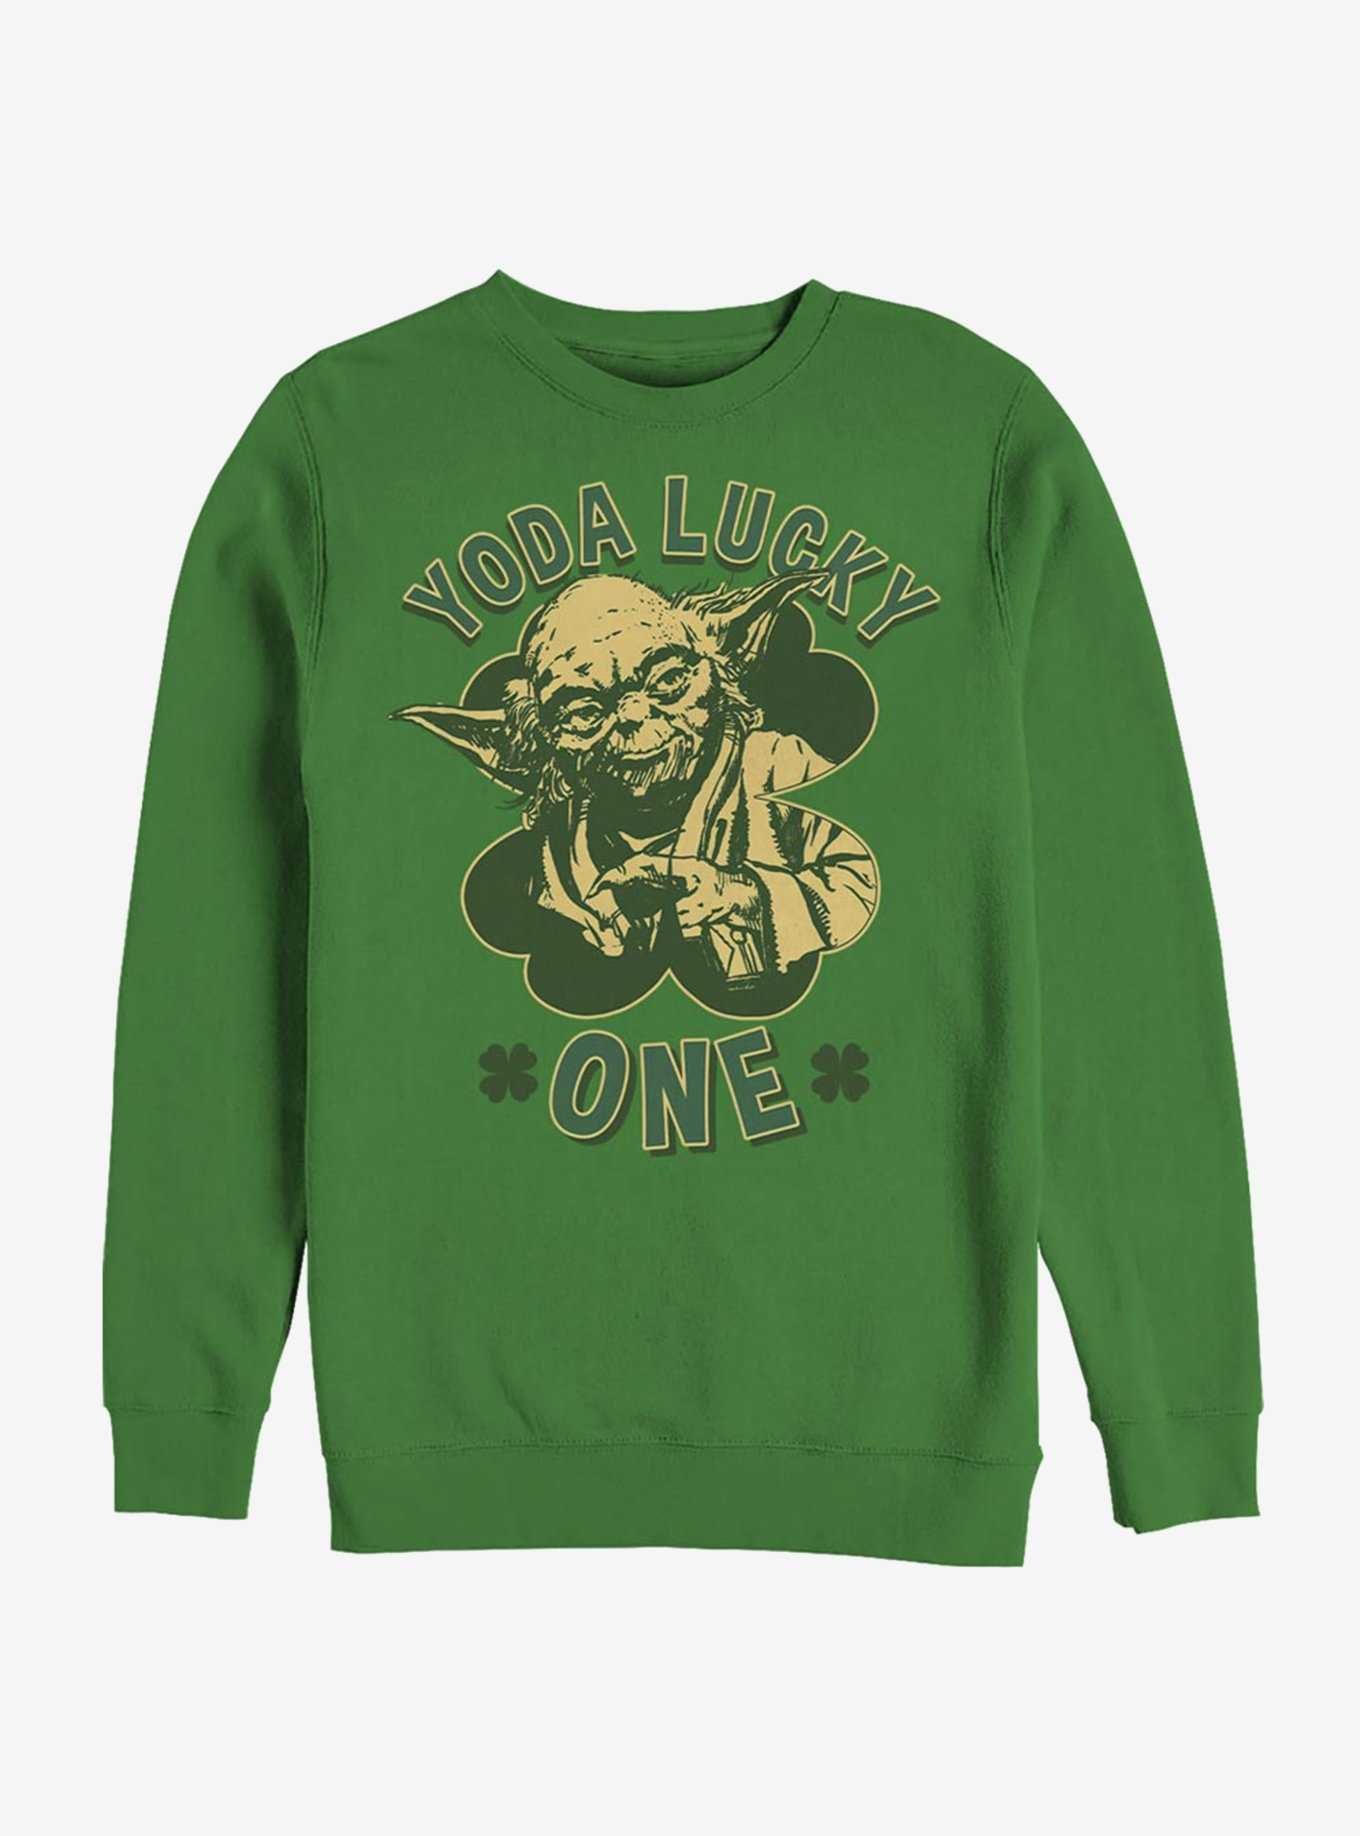 Star Wars Lucky One Sweatshirt, , hi-res